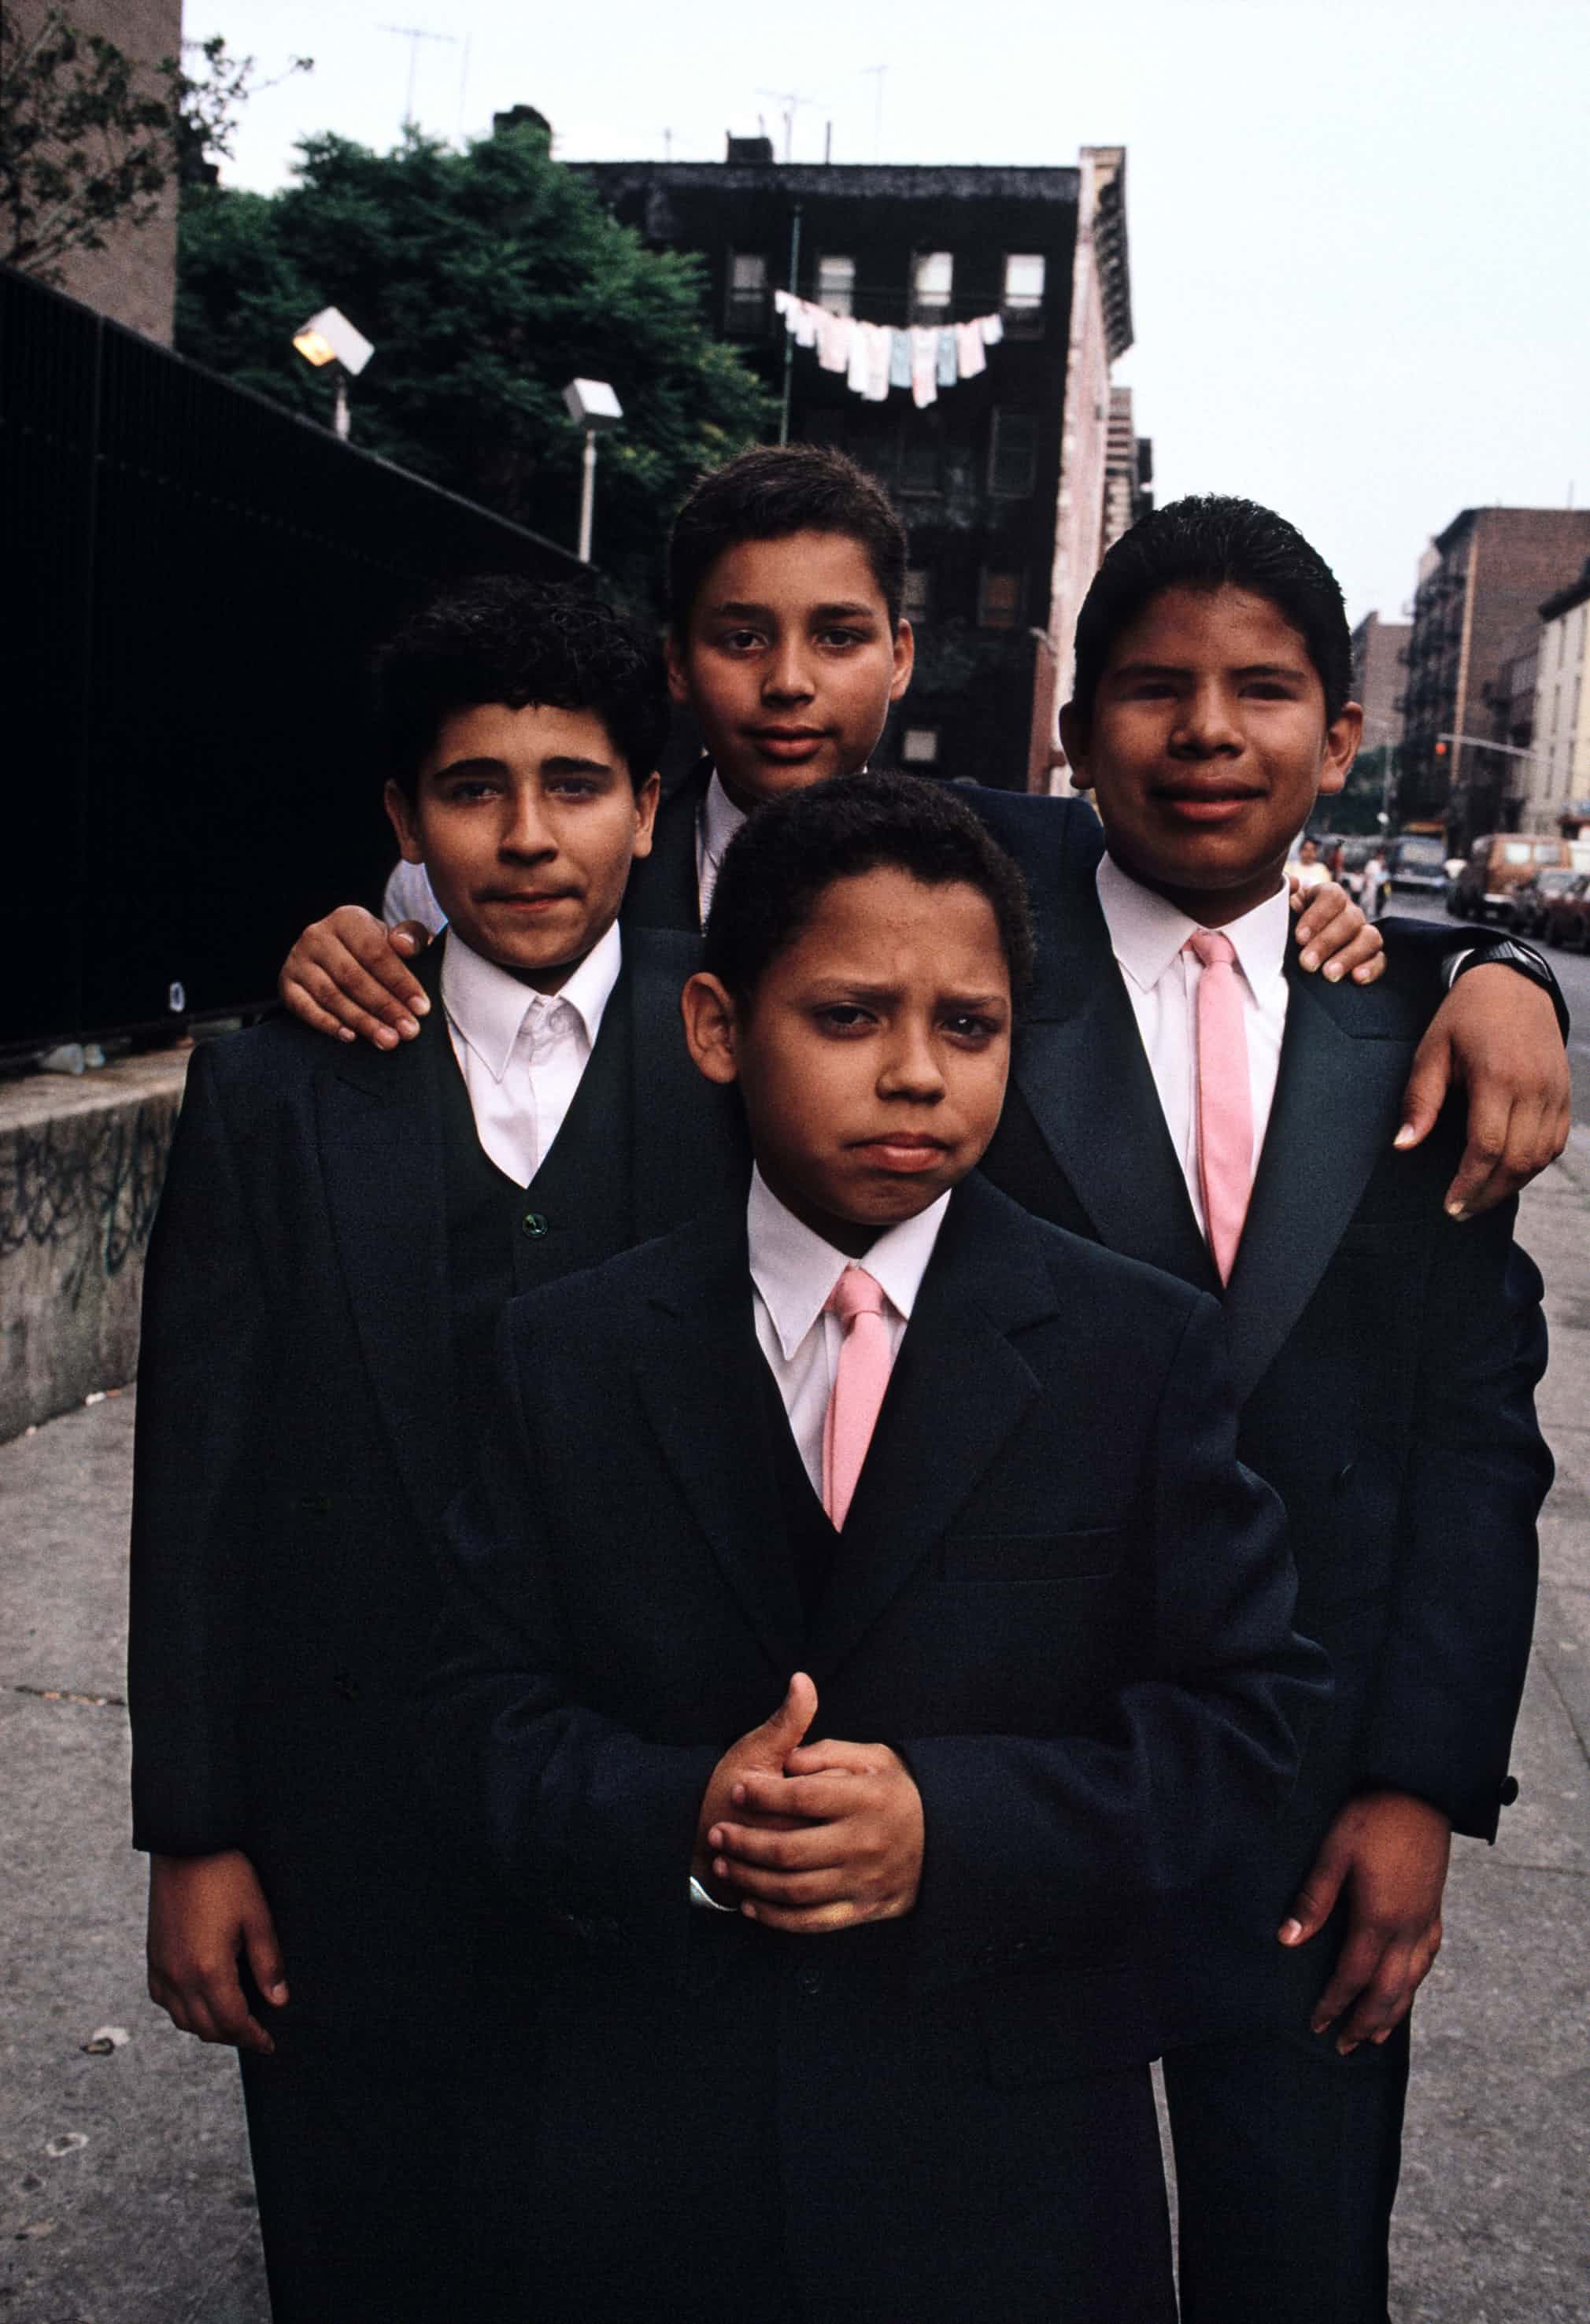 Spanish Harlem photo Joseph Rodriguez